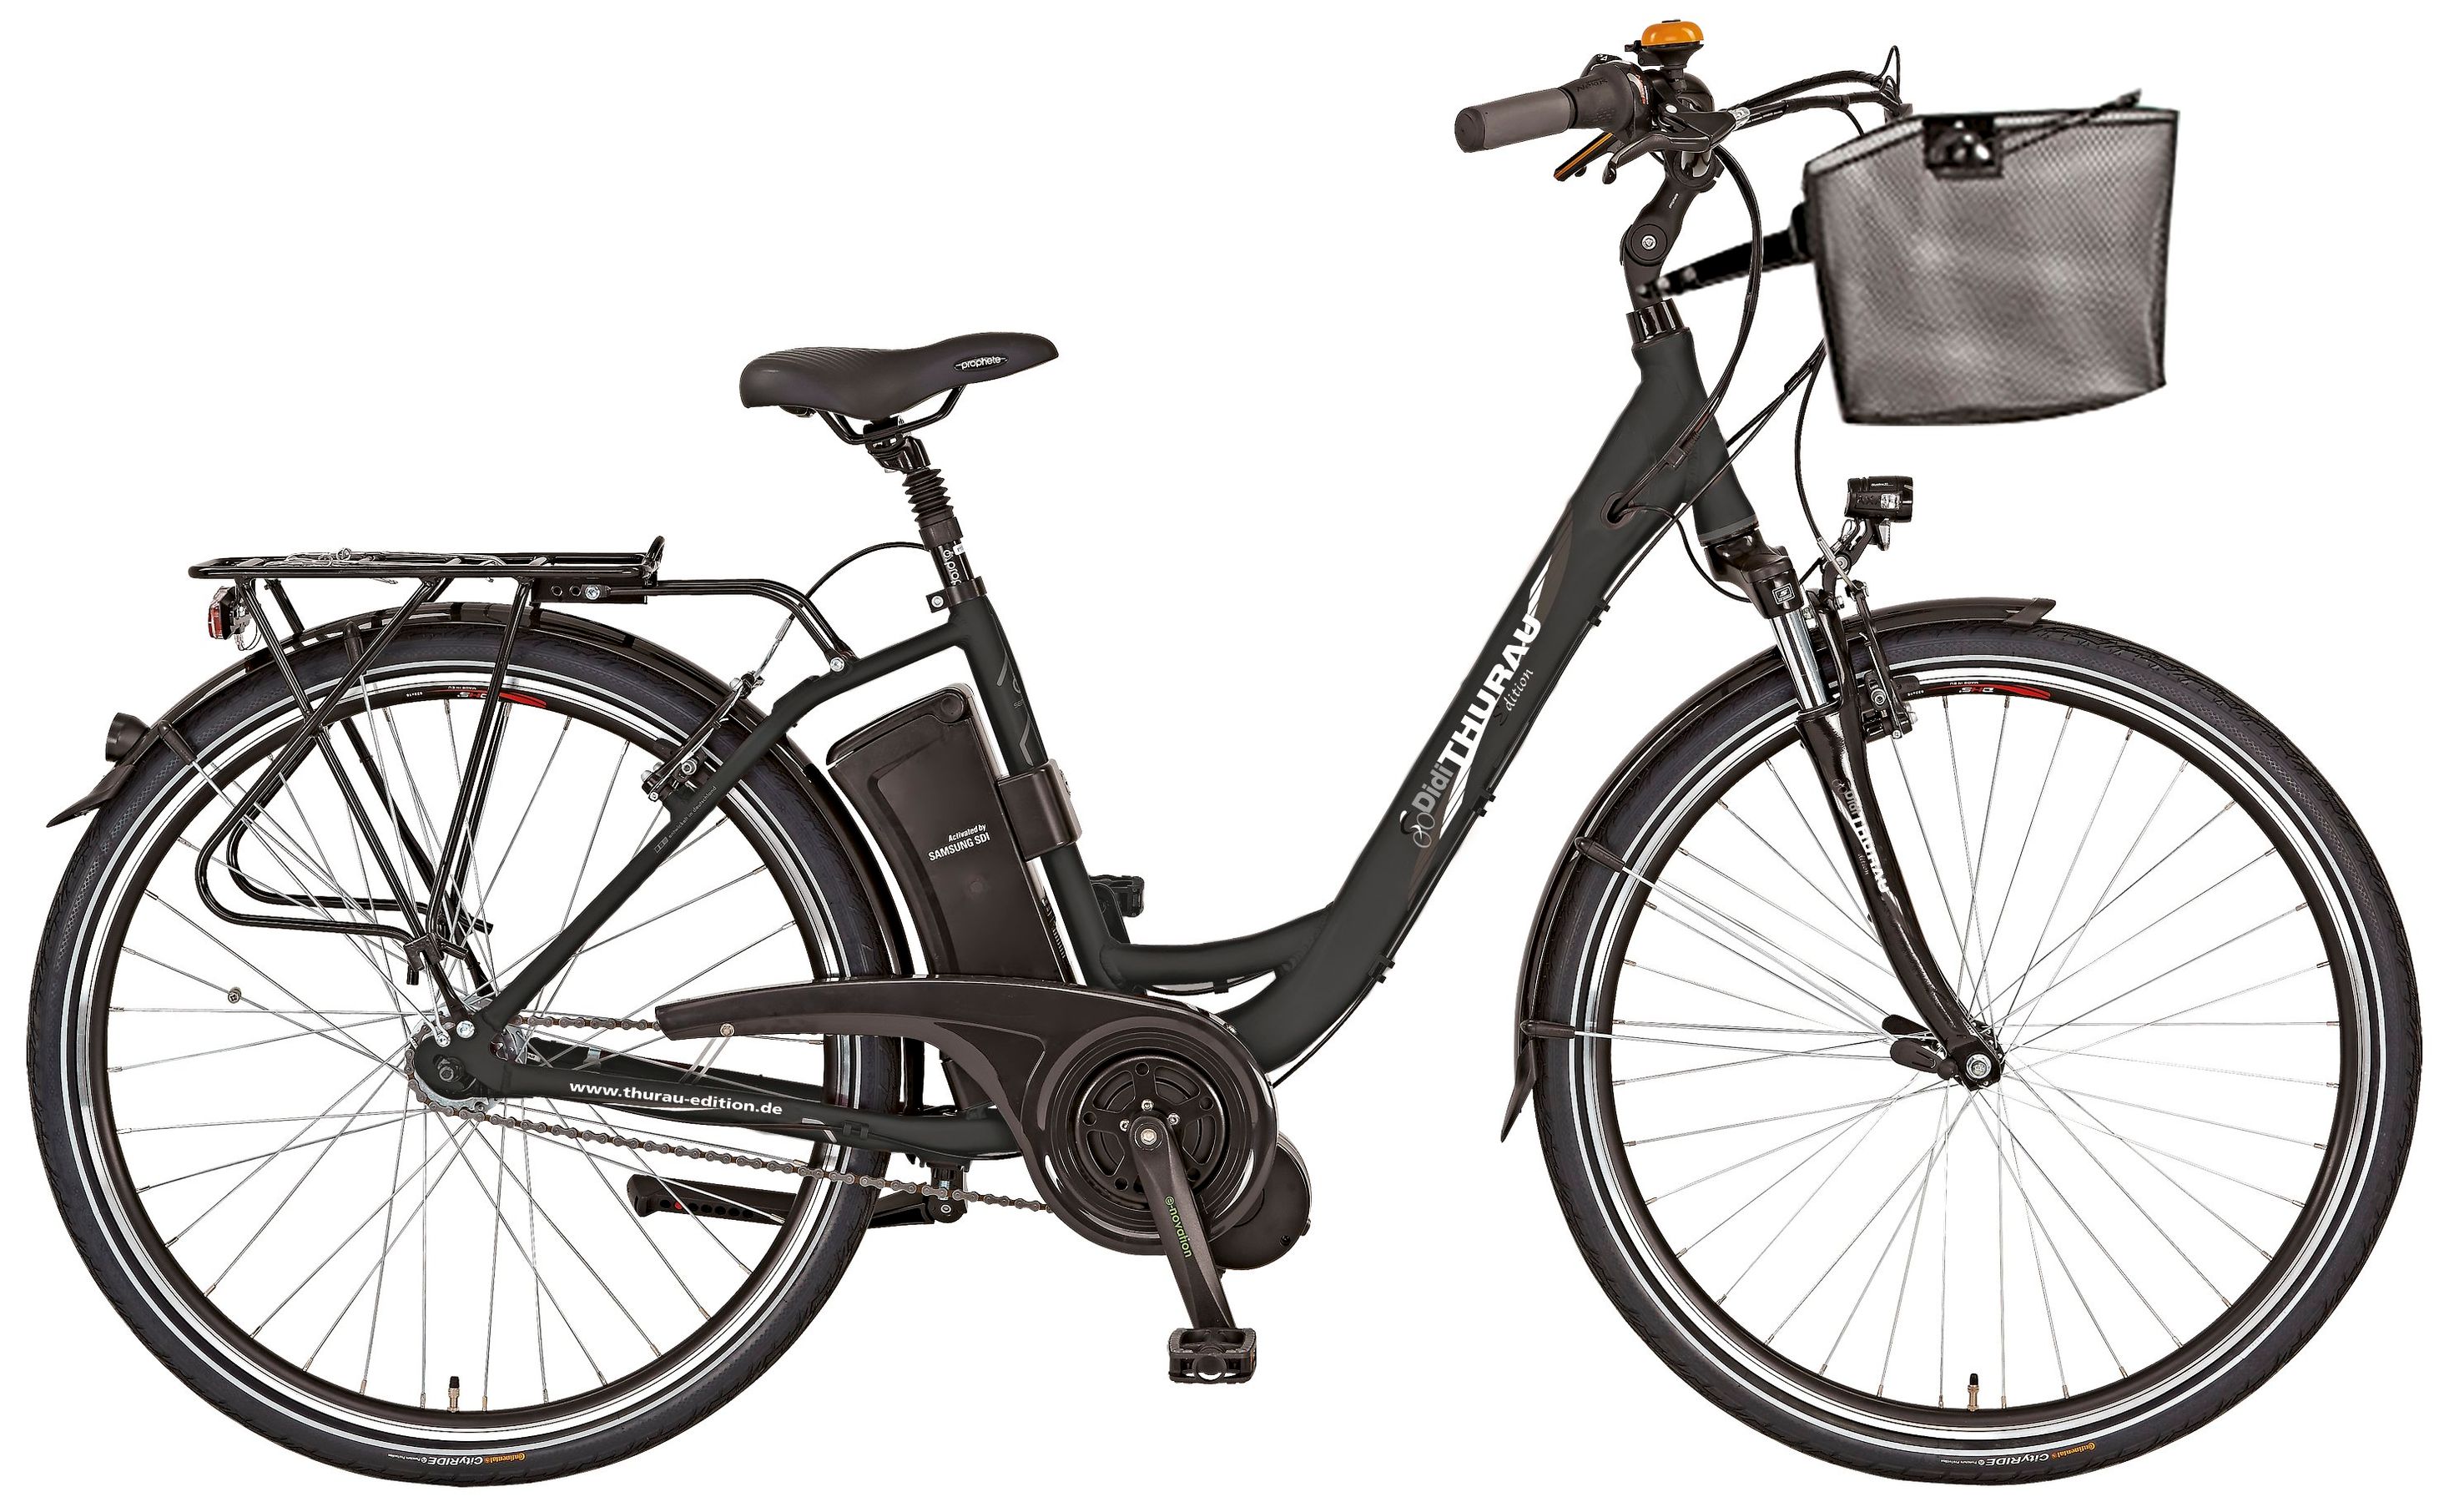 DTE E-Bike Alu City Comfort, 7 PLUS, Mittelmotor | Weltbild.at